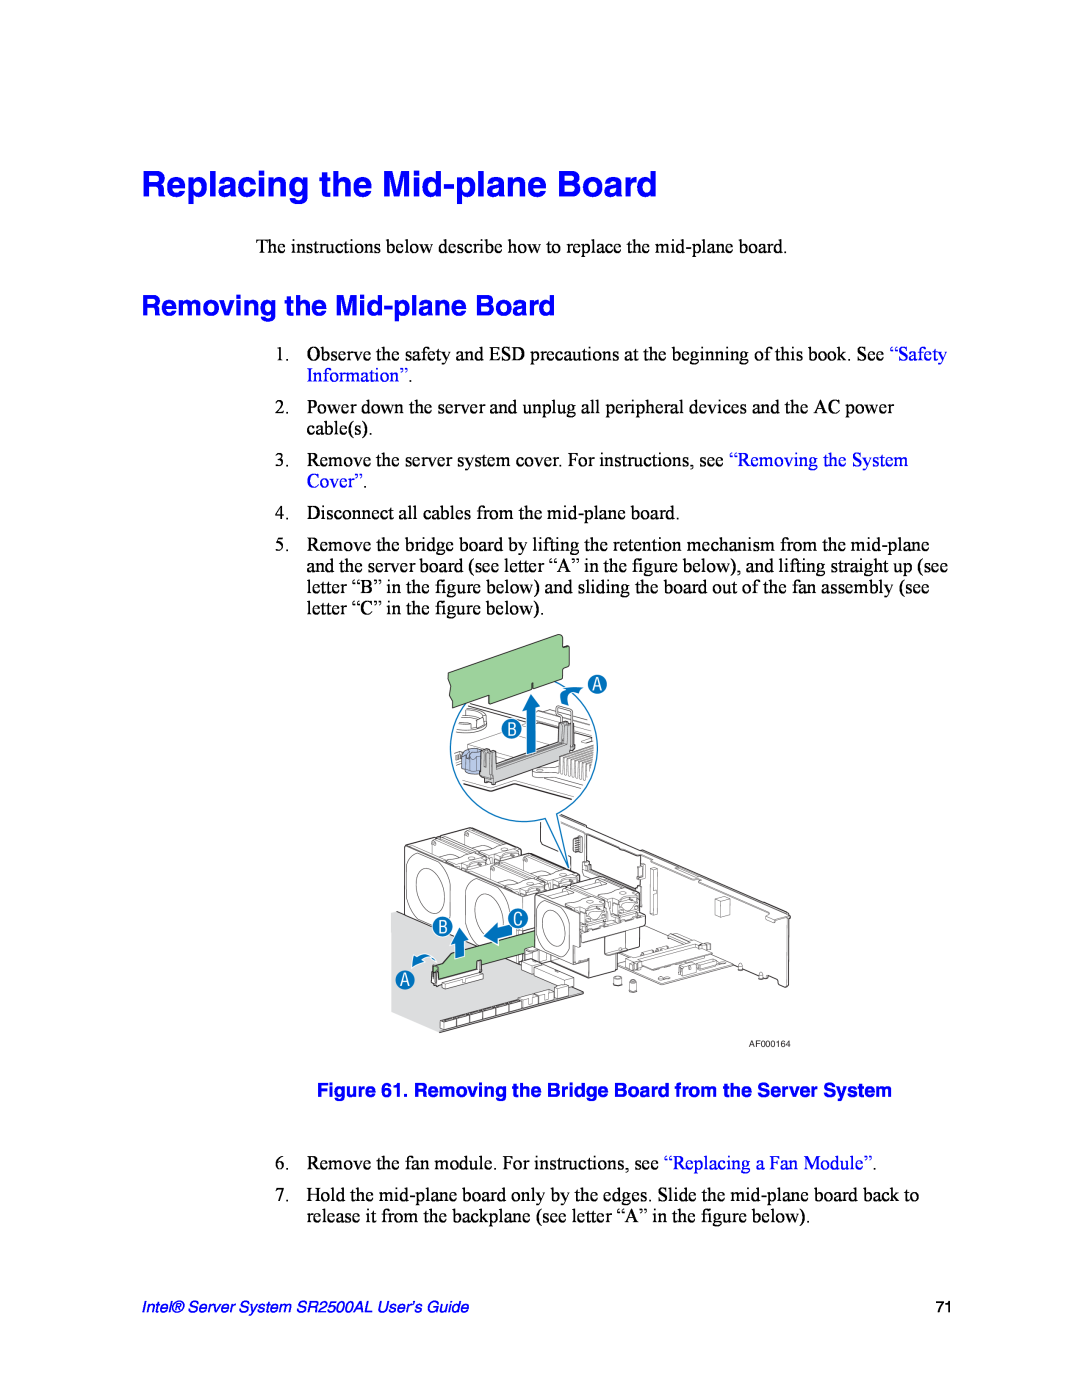 Intel SR2500AL manual Replacing the Mid-plane Board, Removing the Mid-plane Board 